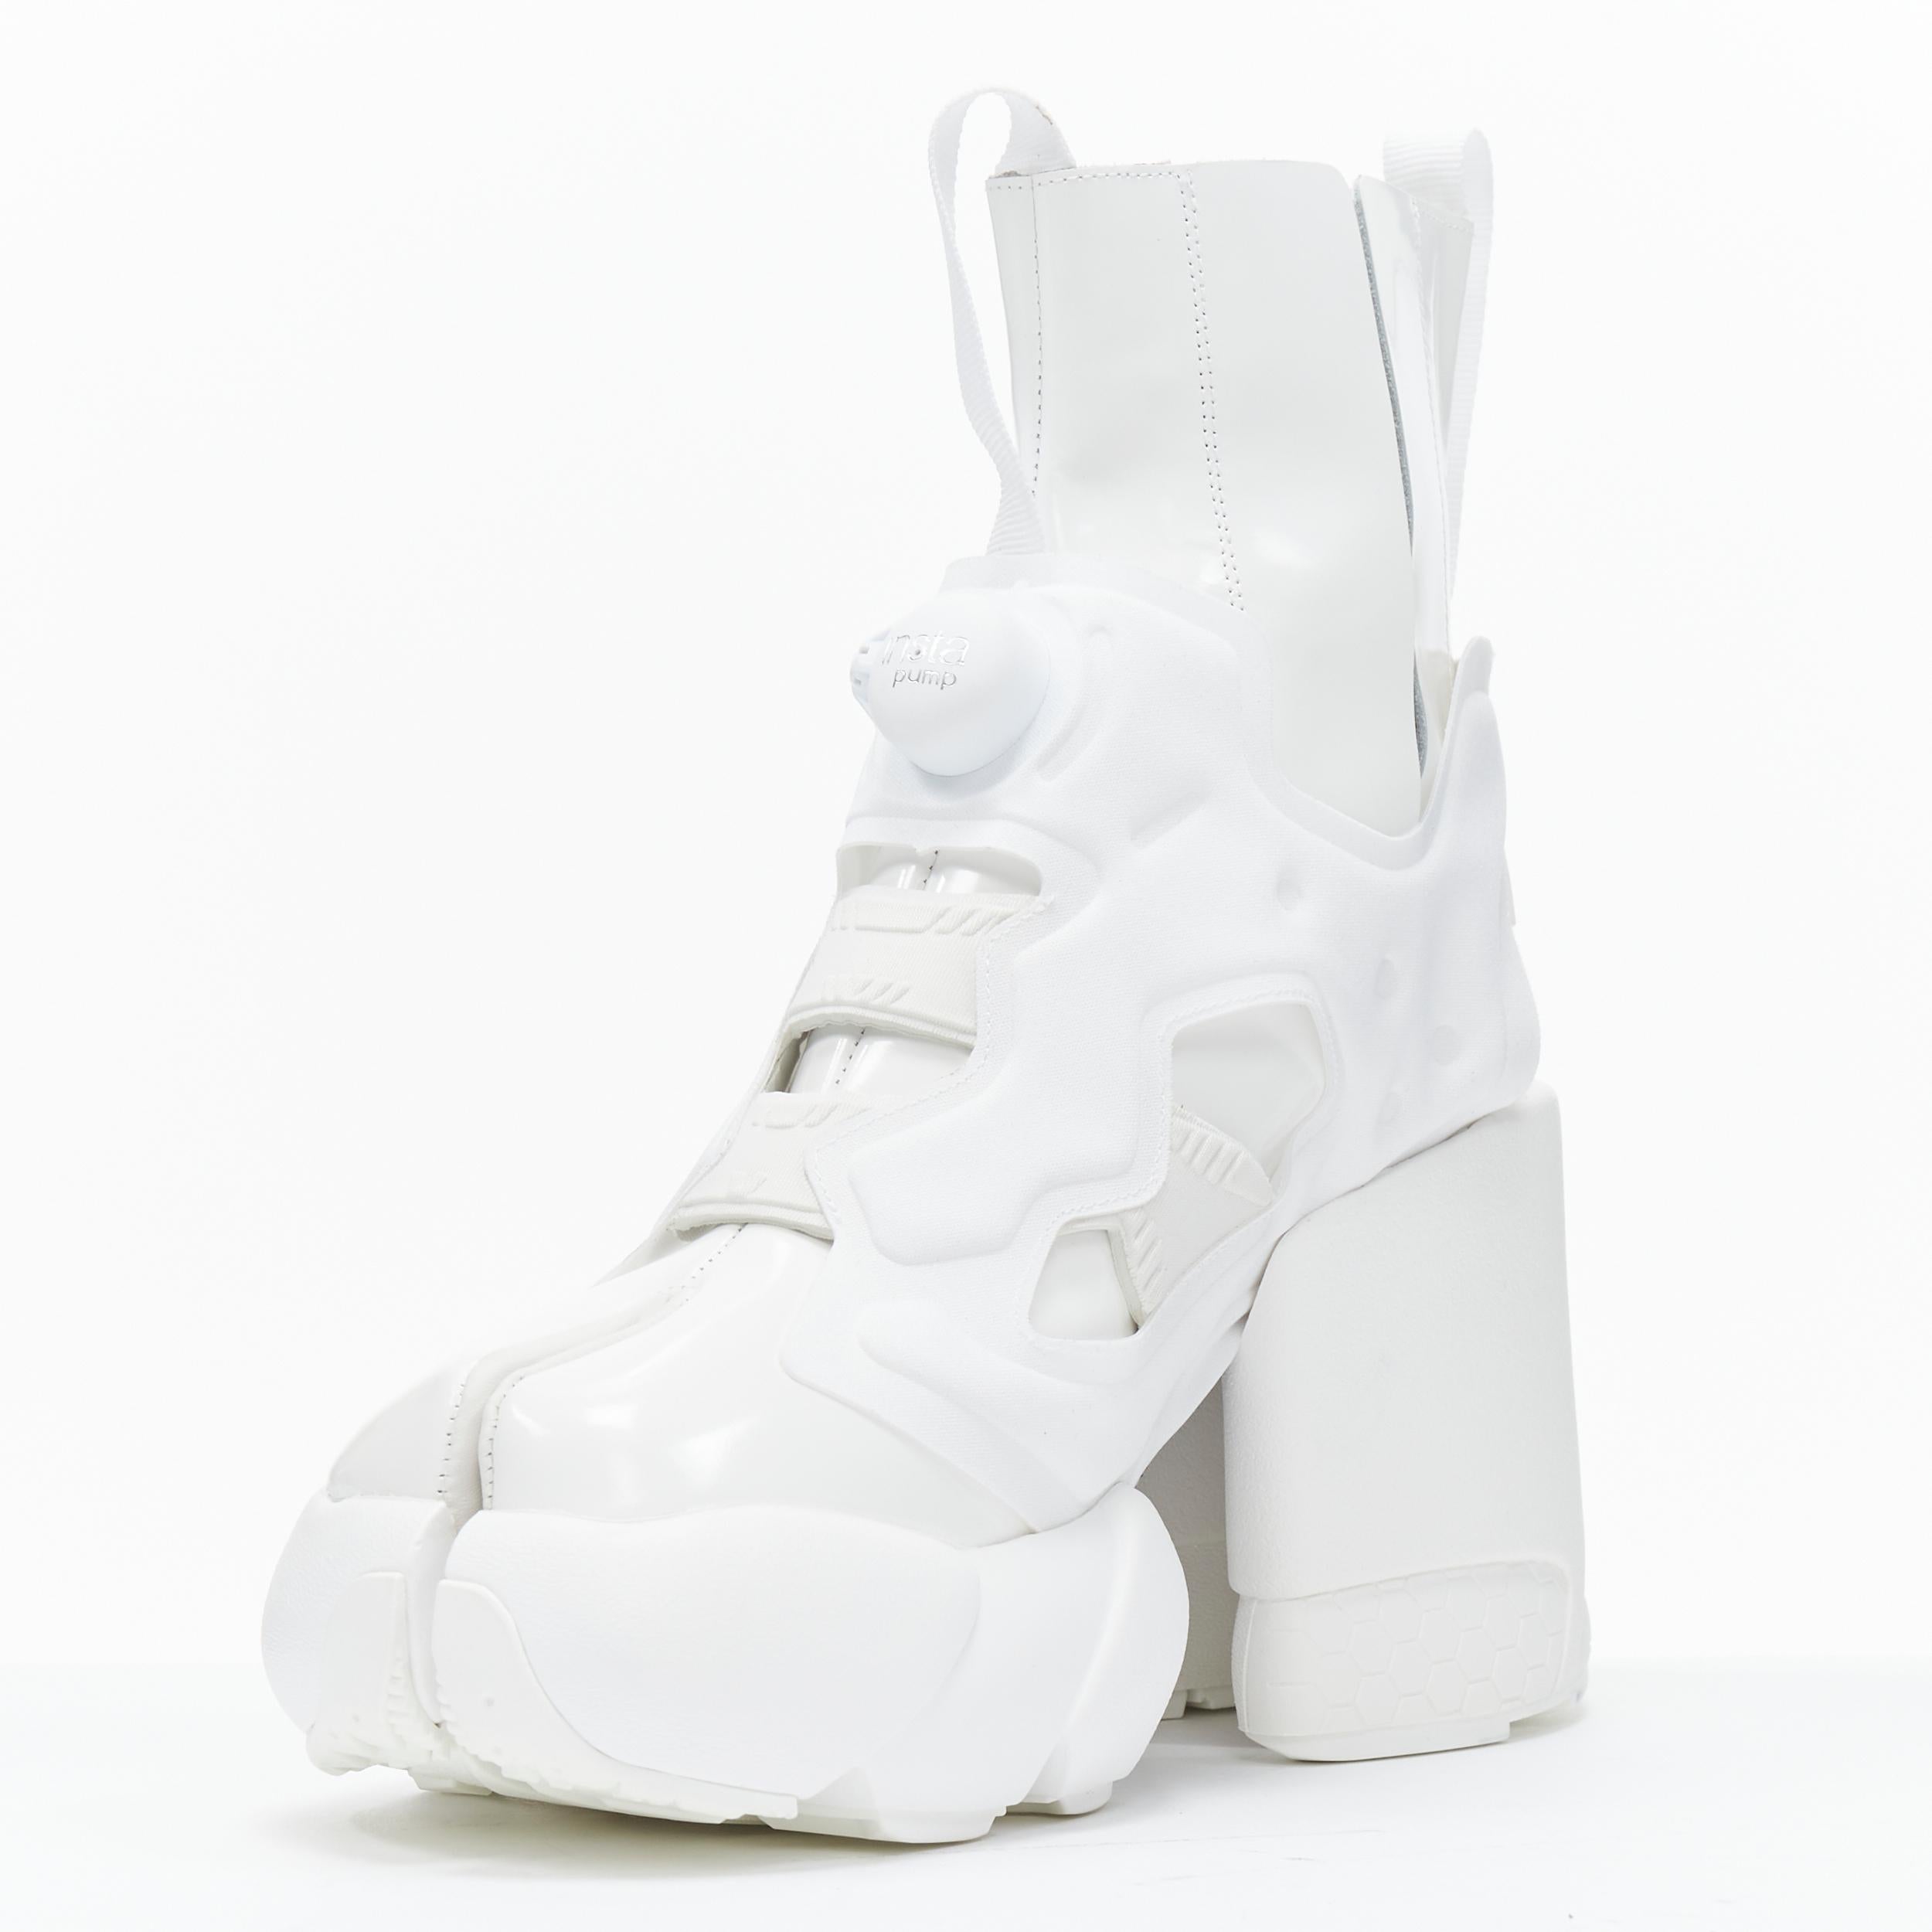 Gray new MAISON MARGIELA REEBOK 2020 Runway Tabi Instapump white sneaker boot EU36